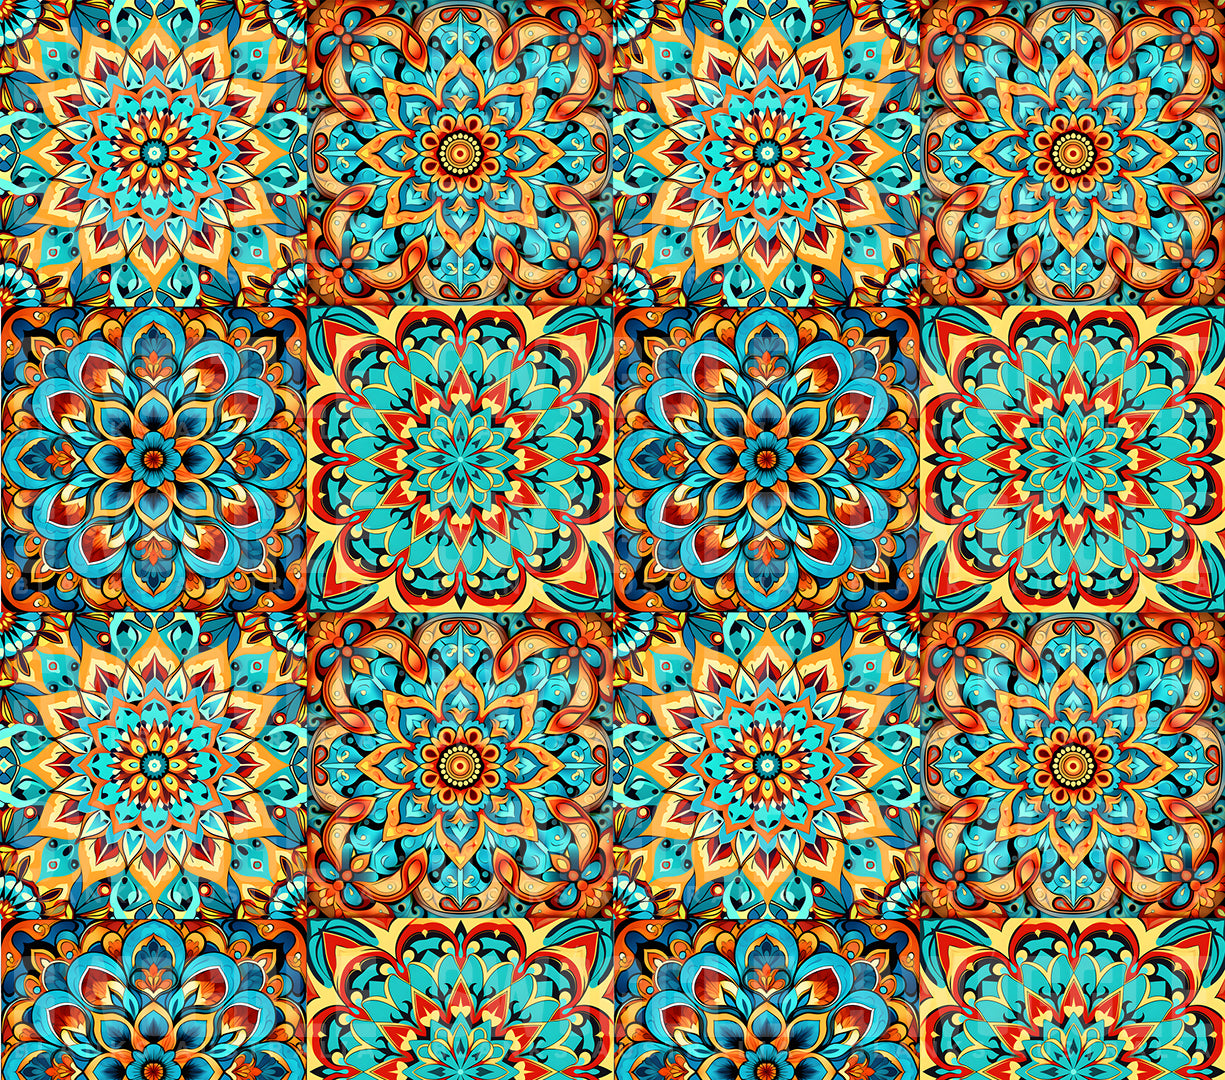 Moroccan Tiles Abstract Print #25 - Digital Download - 20oz Skinny Straight Tumbler Wrap